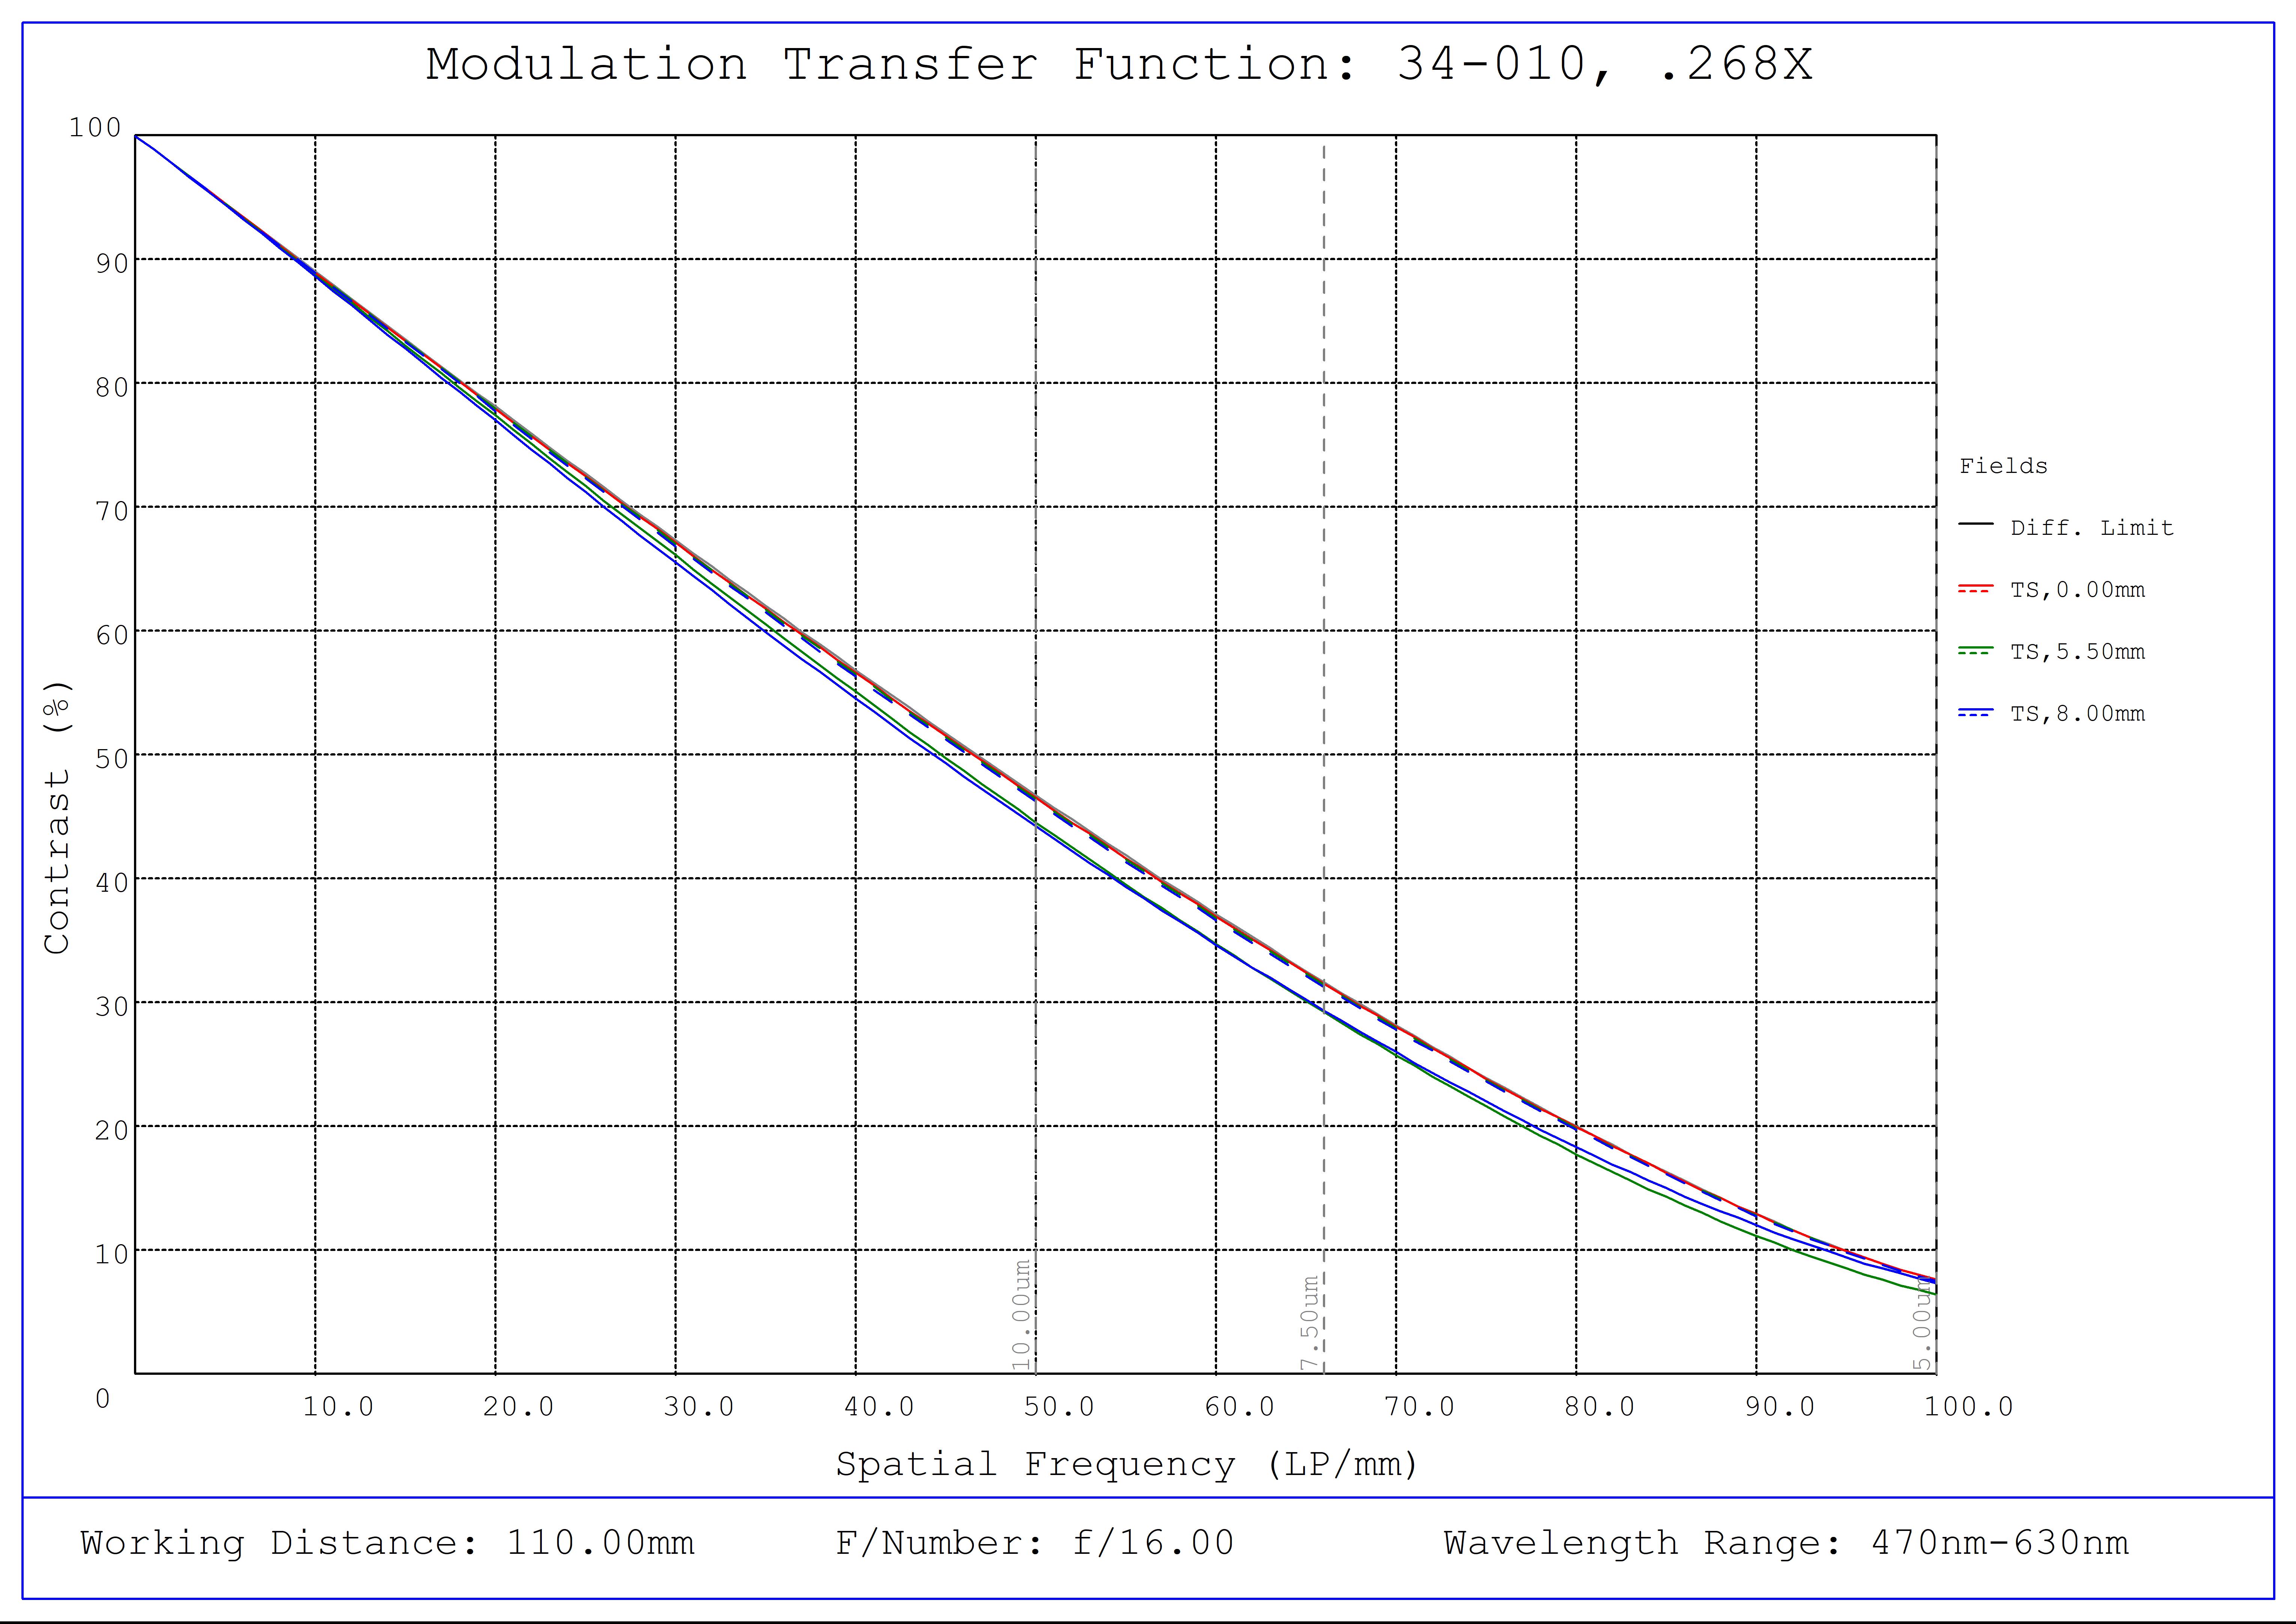 #34-010, 0.268X, 1" C-Mount TitanTL® Telecentric Lens, Modulated Transfer Function (MTF) Plot, 110mm Working Distance, f16